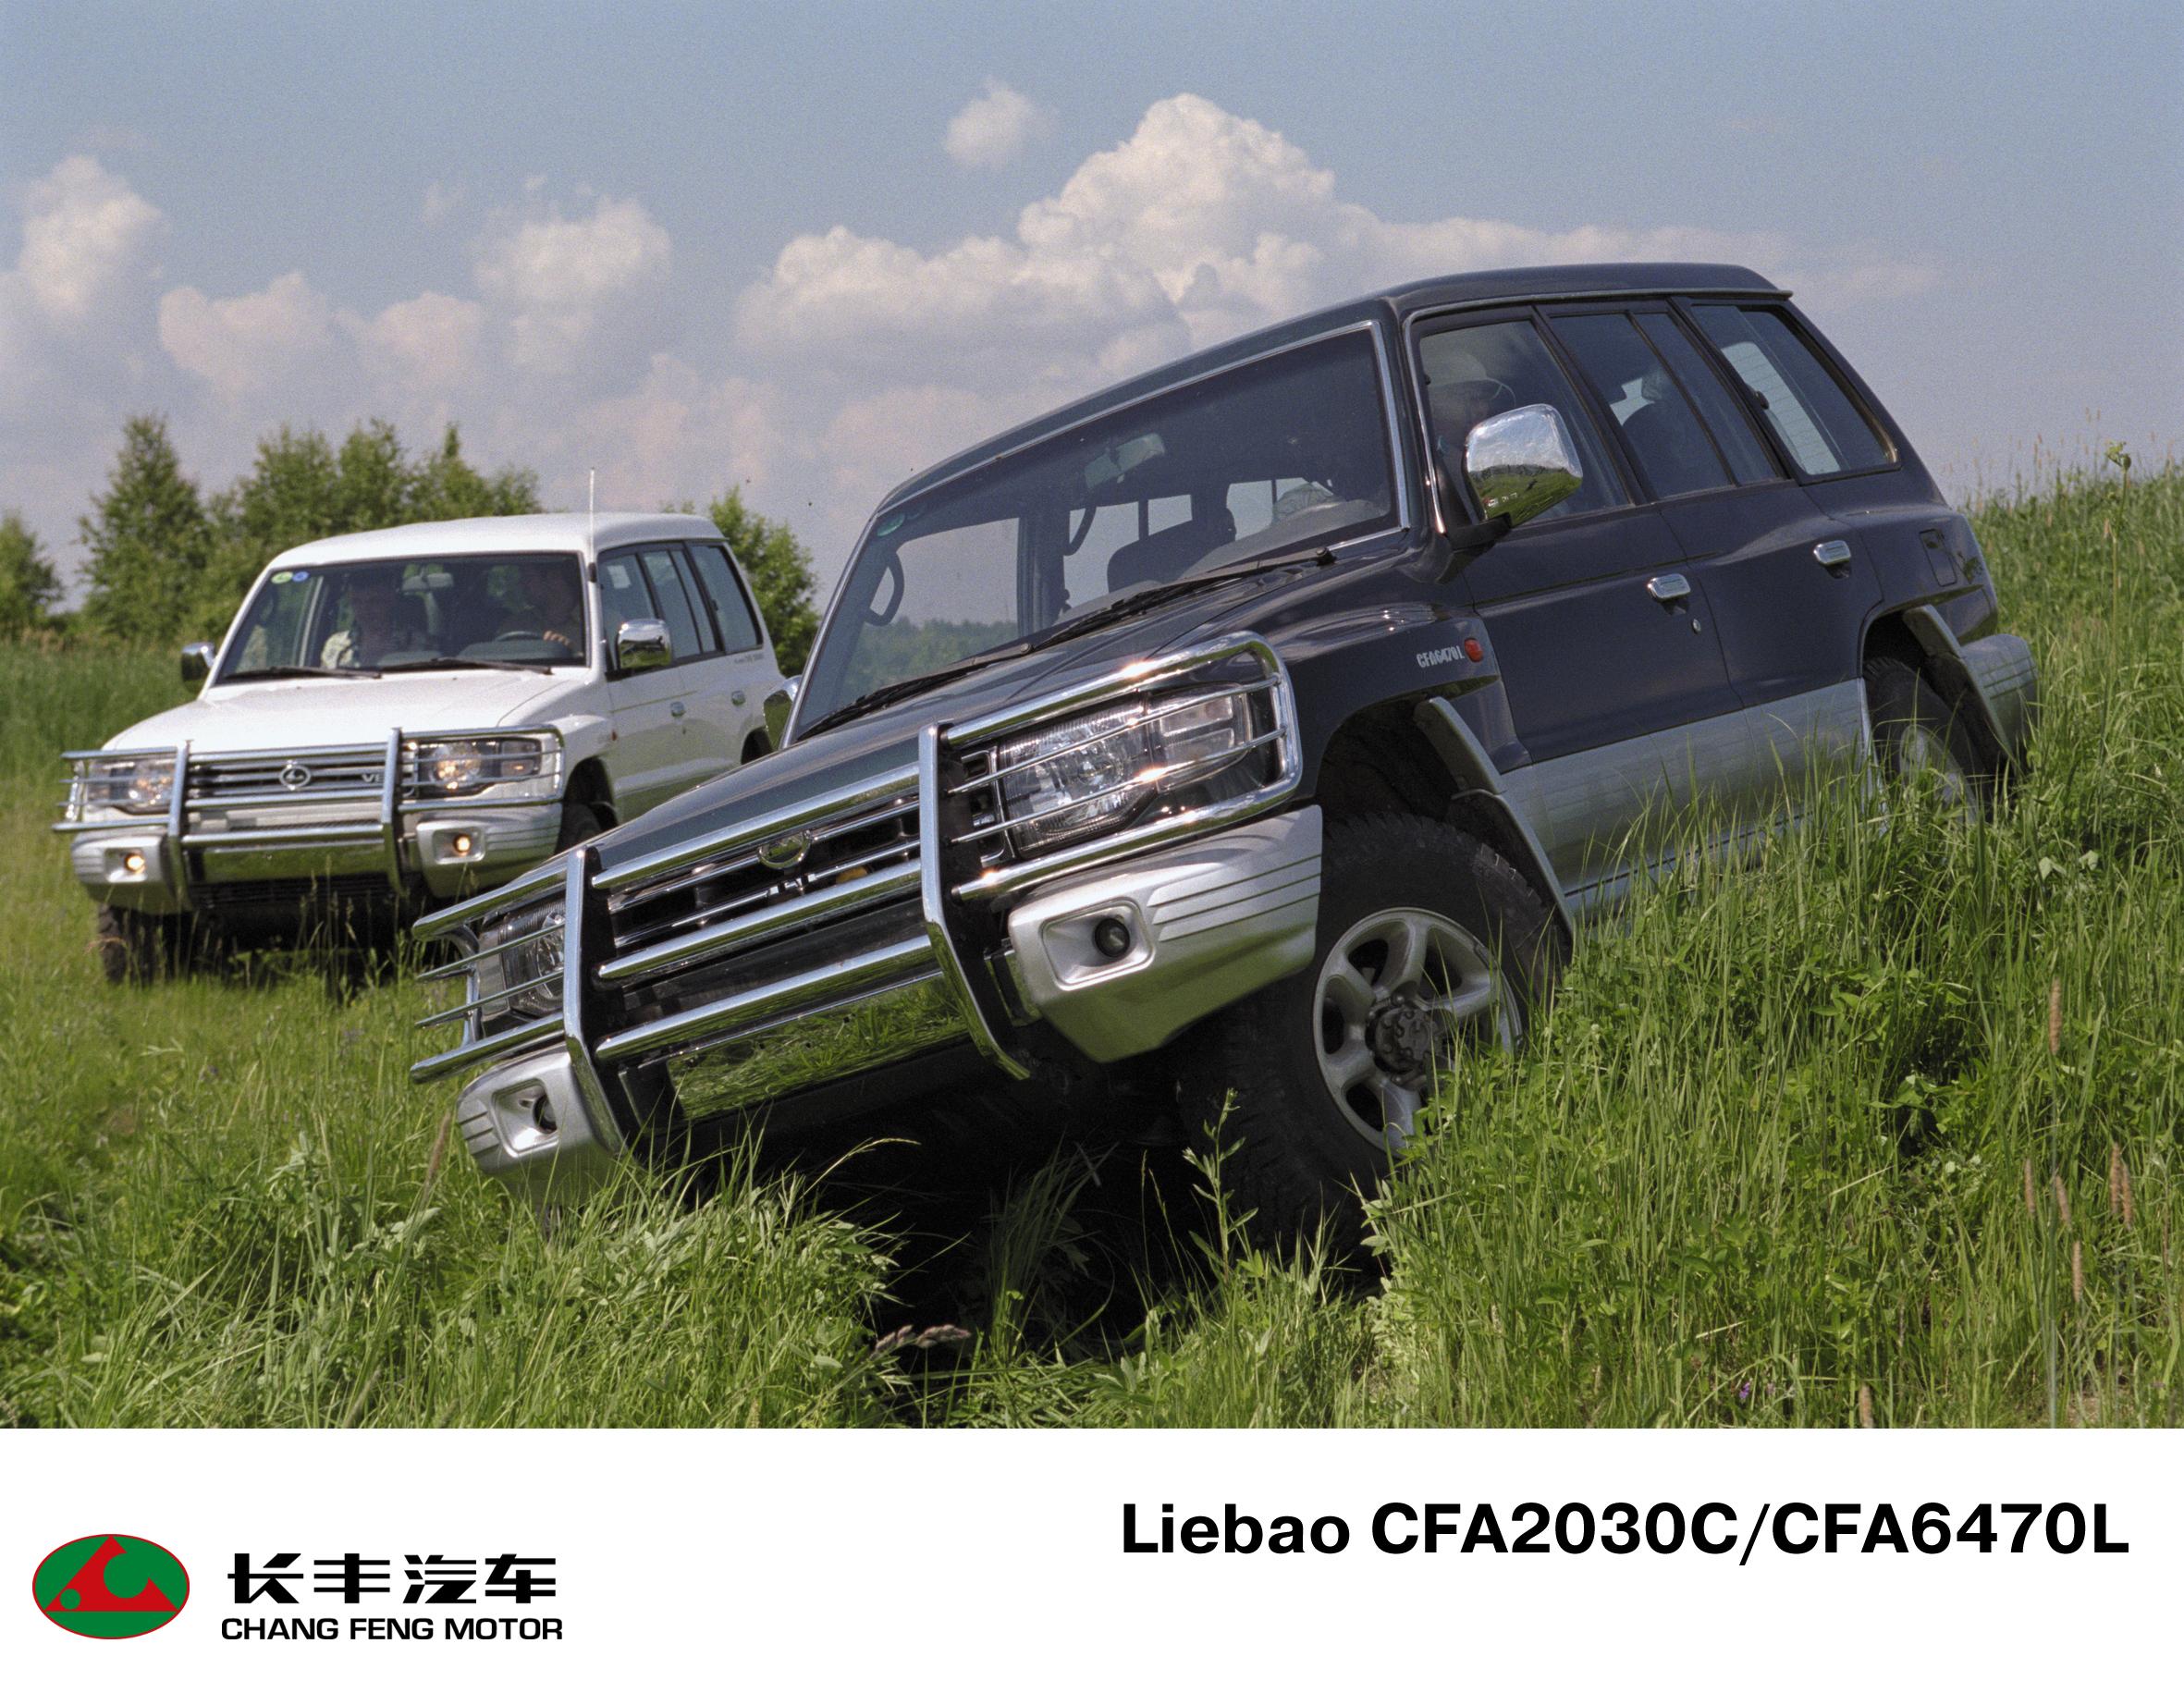 Начались продажи лицензионной версии Mitsubishi Pajero II - «Leopard»